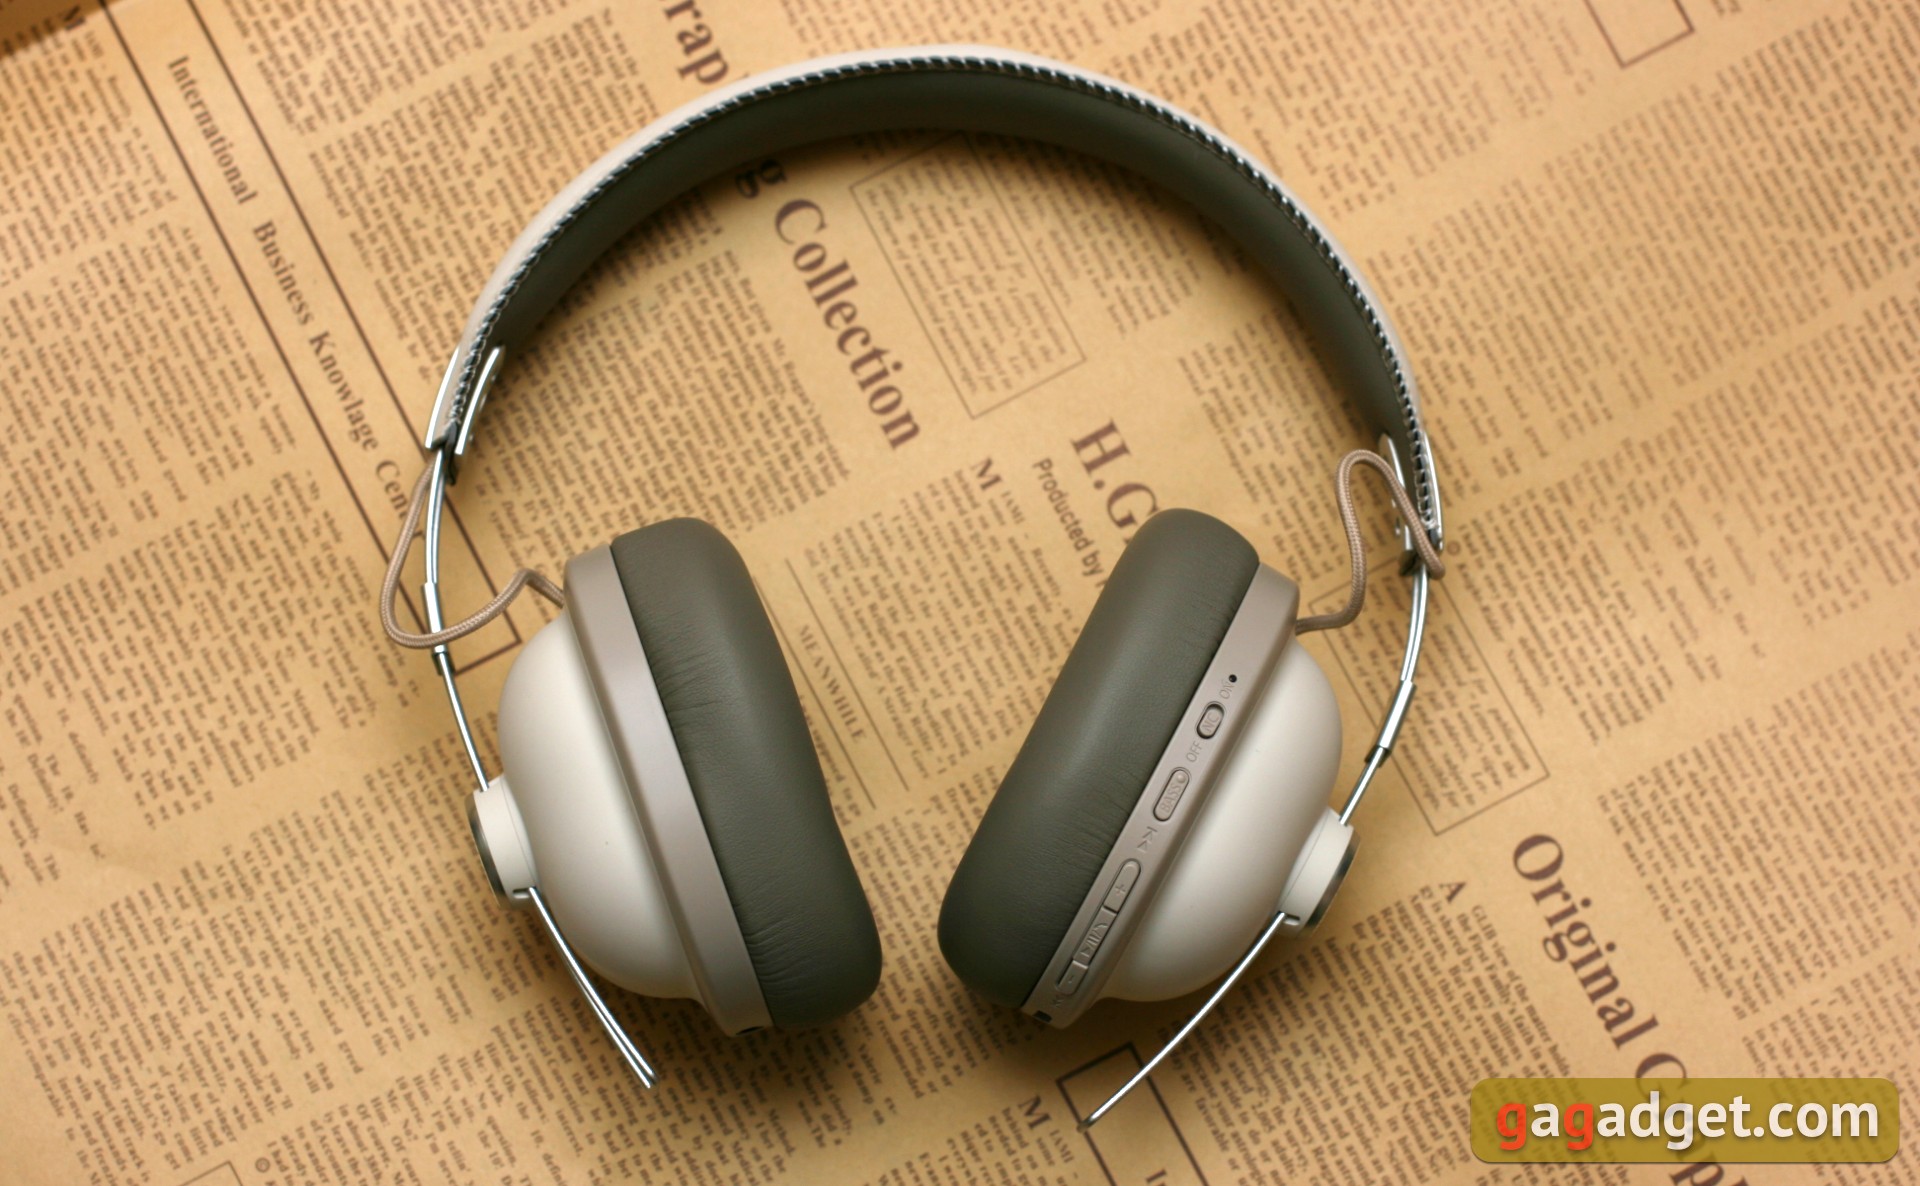 Panasonic RP-HTX90 look back: effective retro noise-canceling headphones